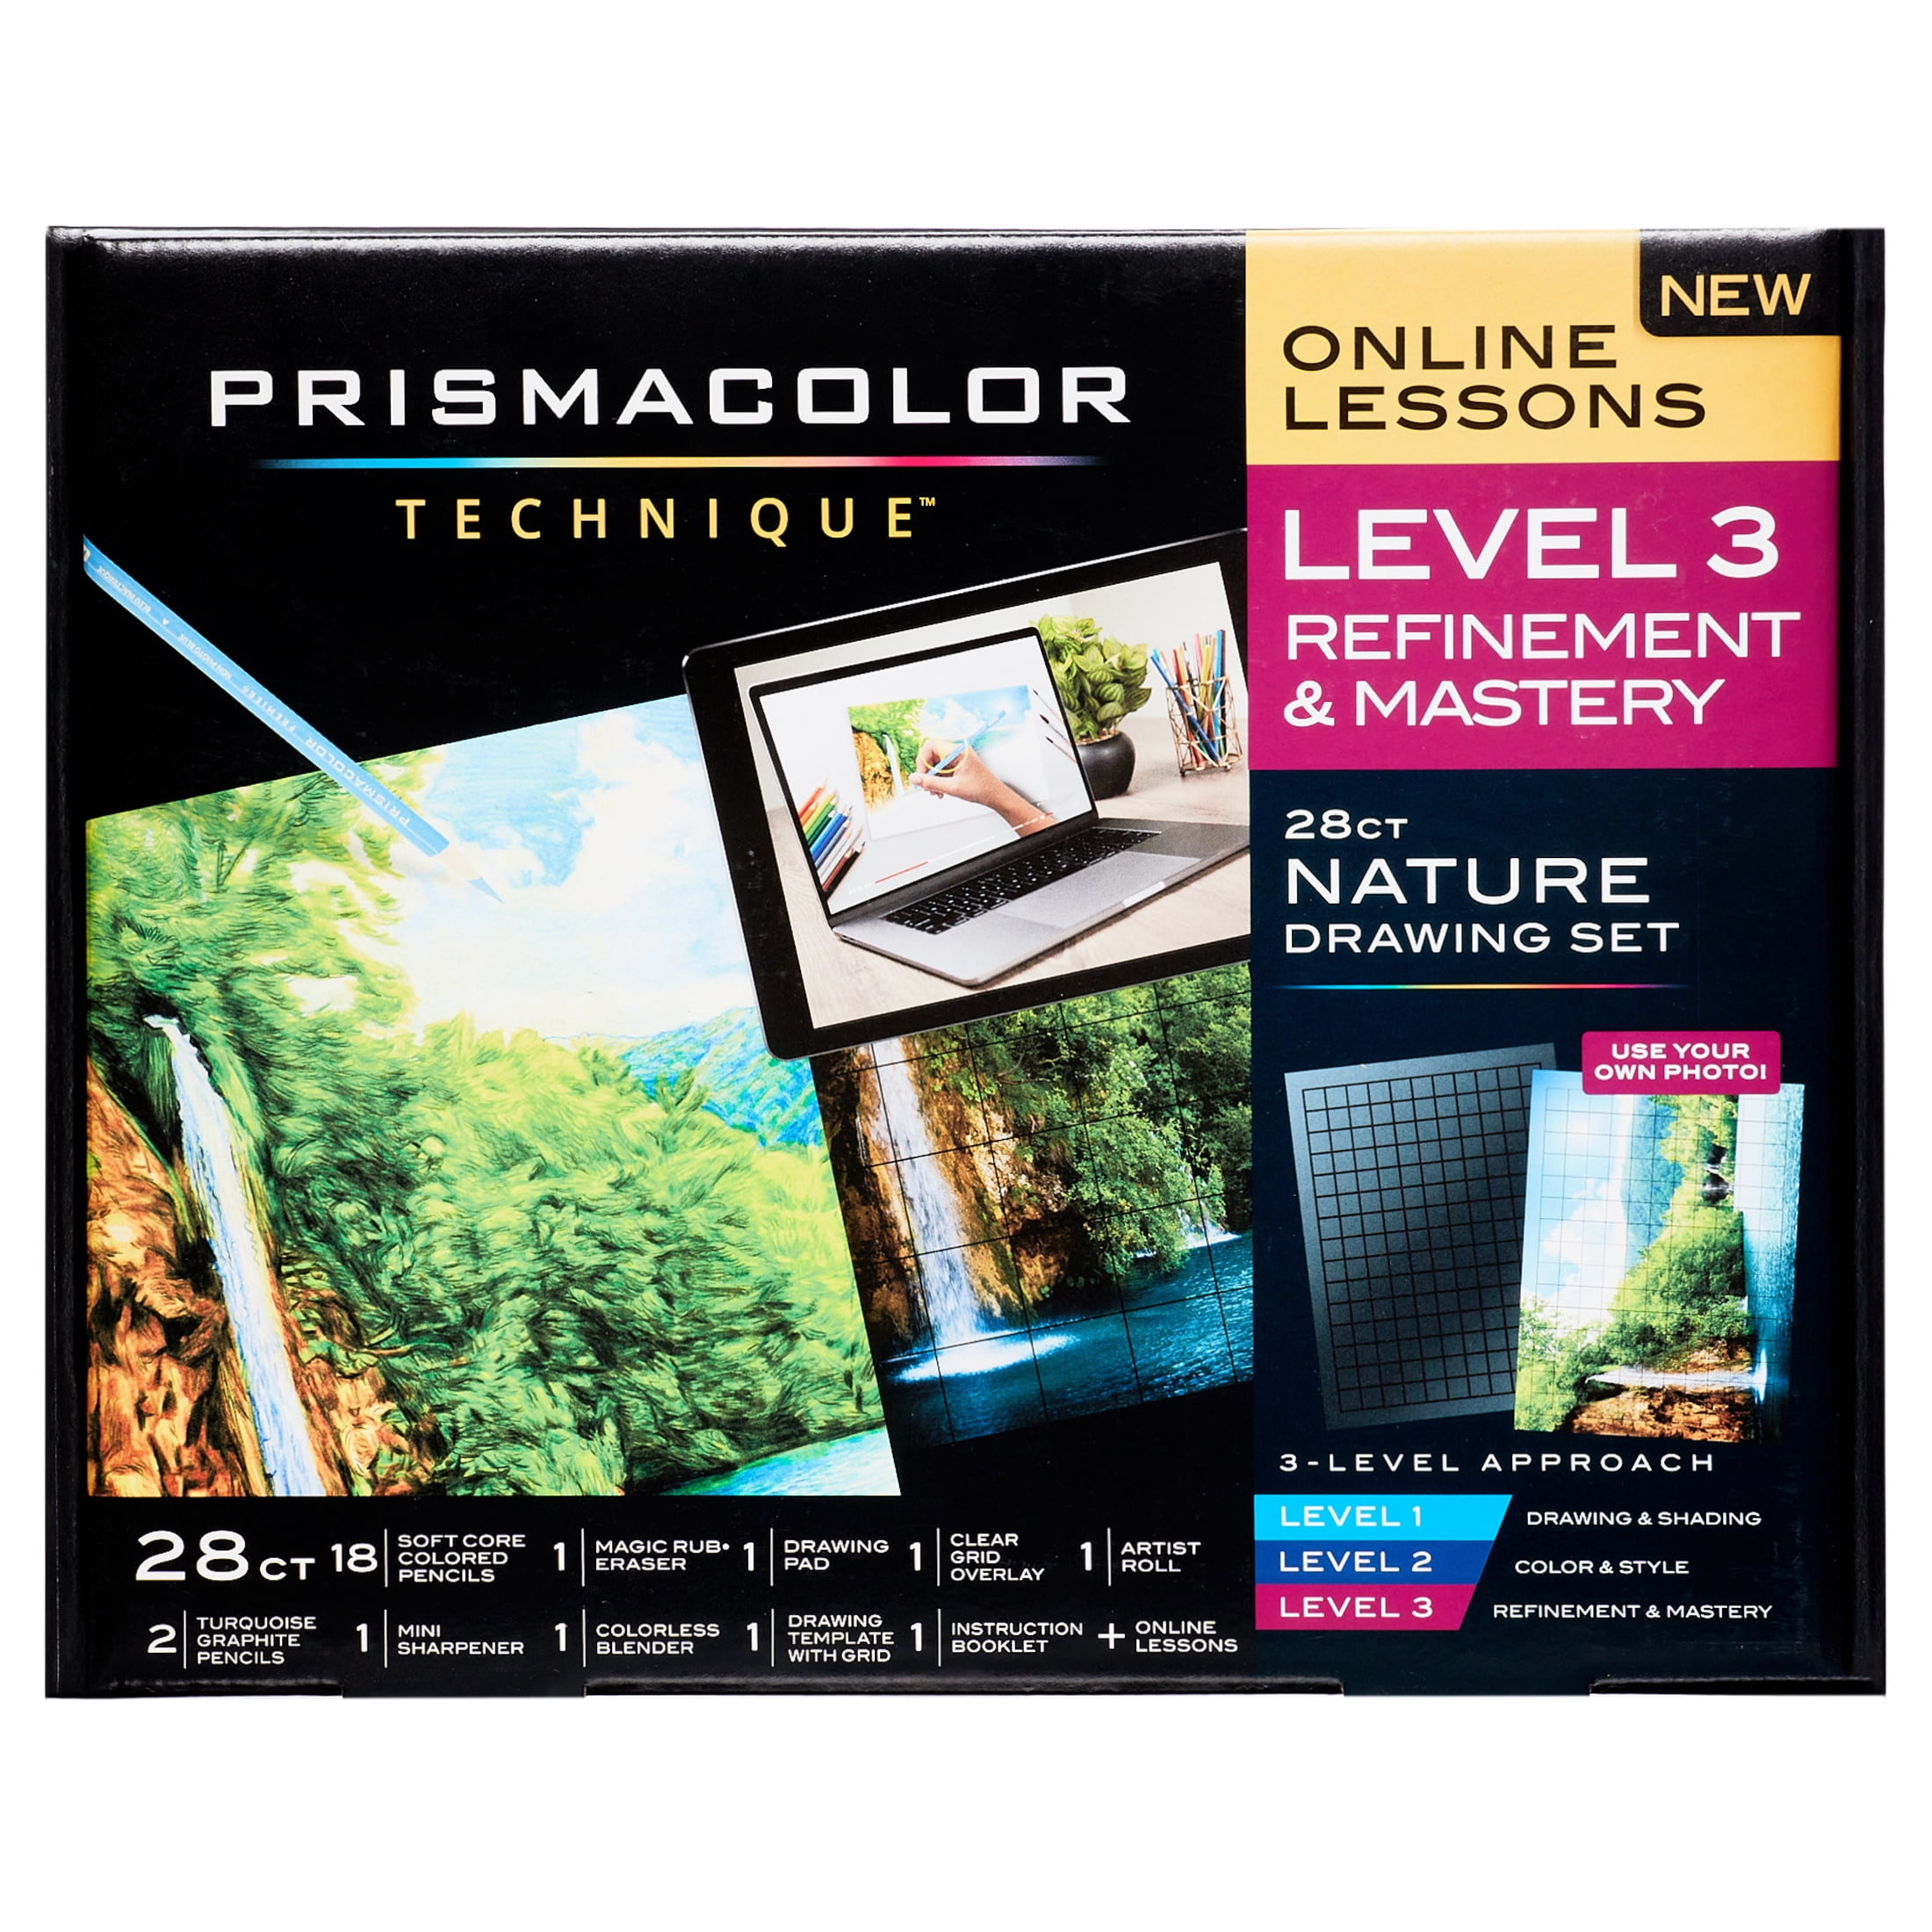 Prismacolor Technique Nature Drawing Set - Level 3, Refinement & Mastery